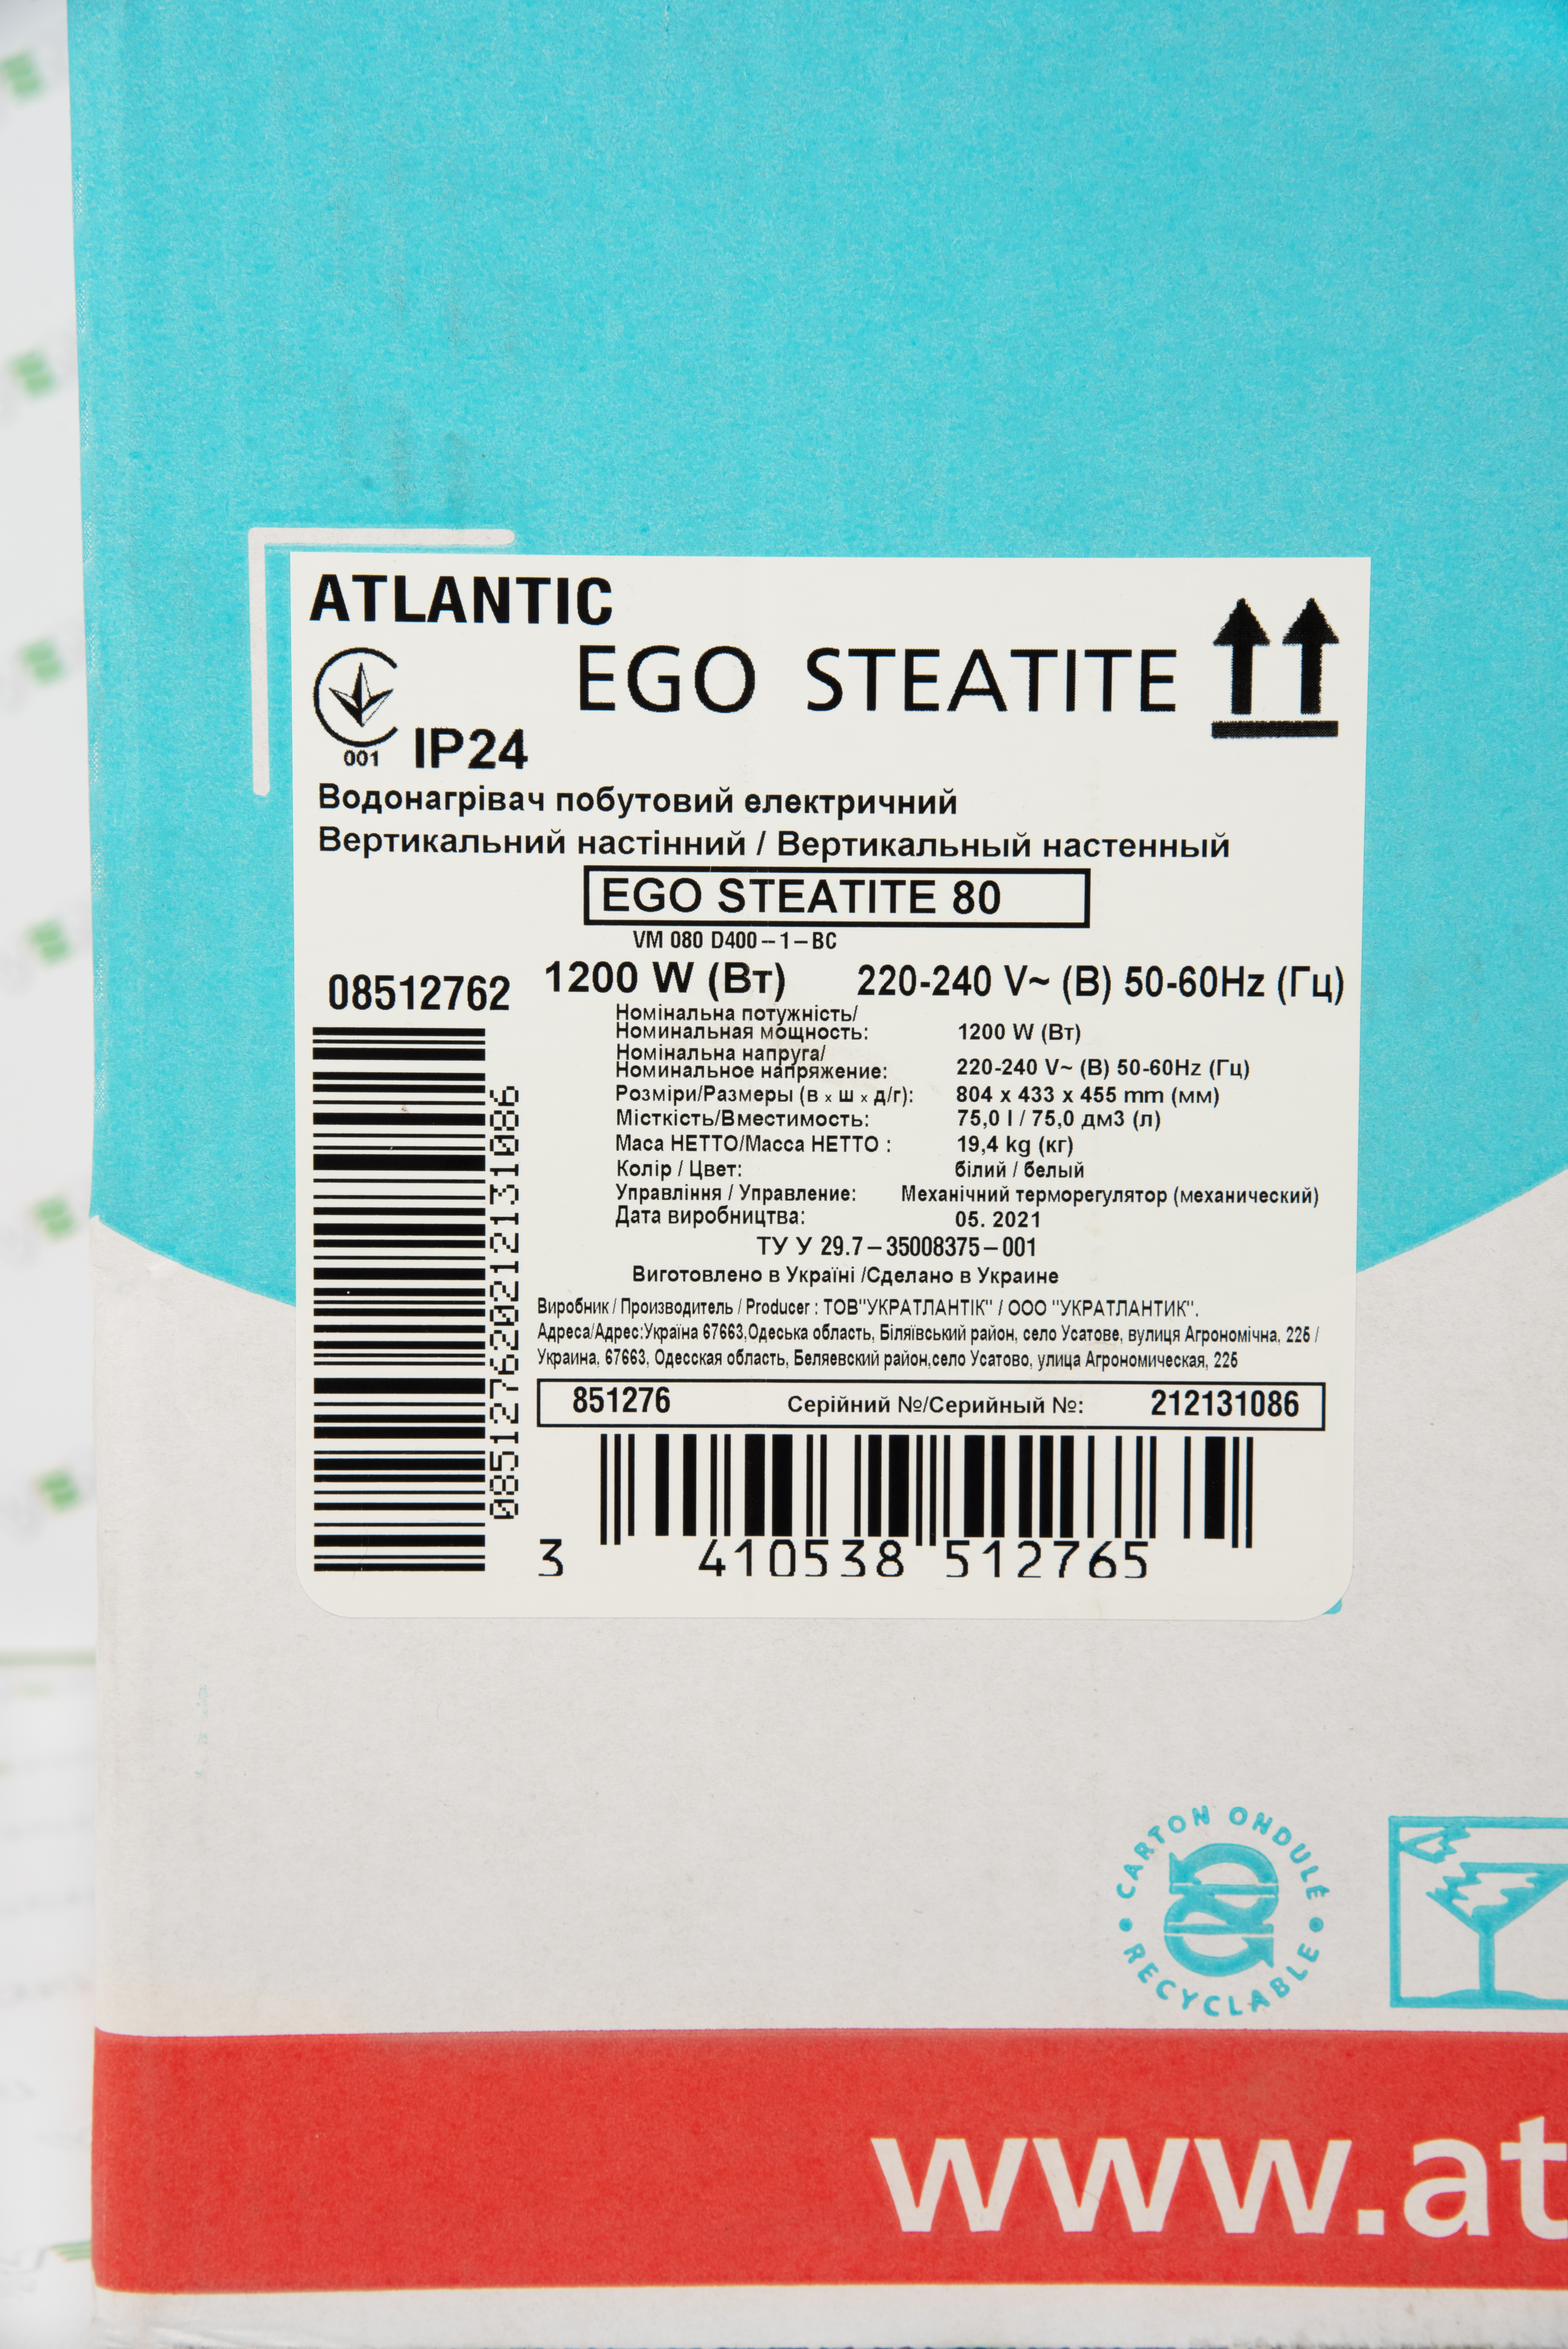 Atlantic Steatite Ego VM 80 D400-1-BC в продаже - фото 19